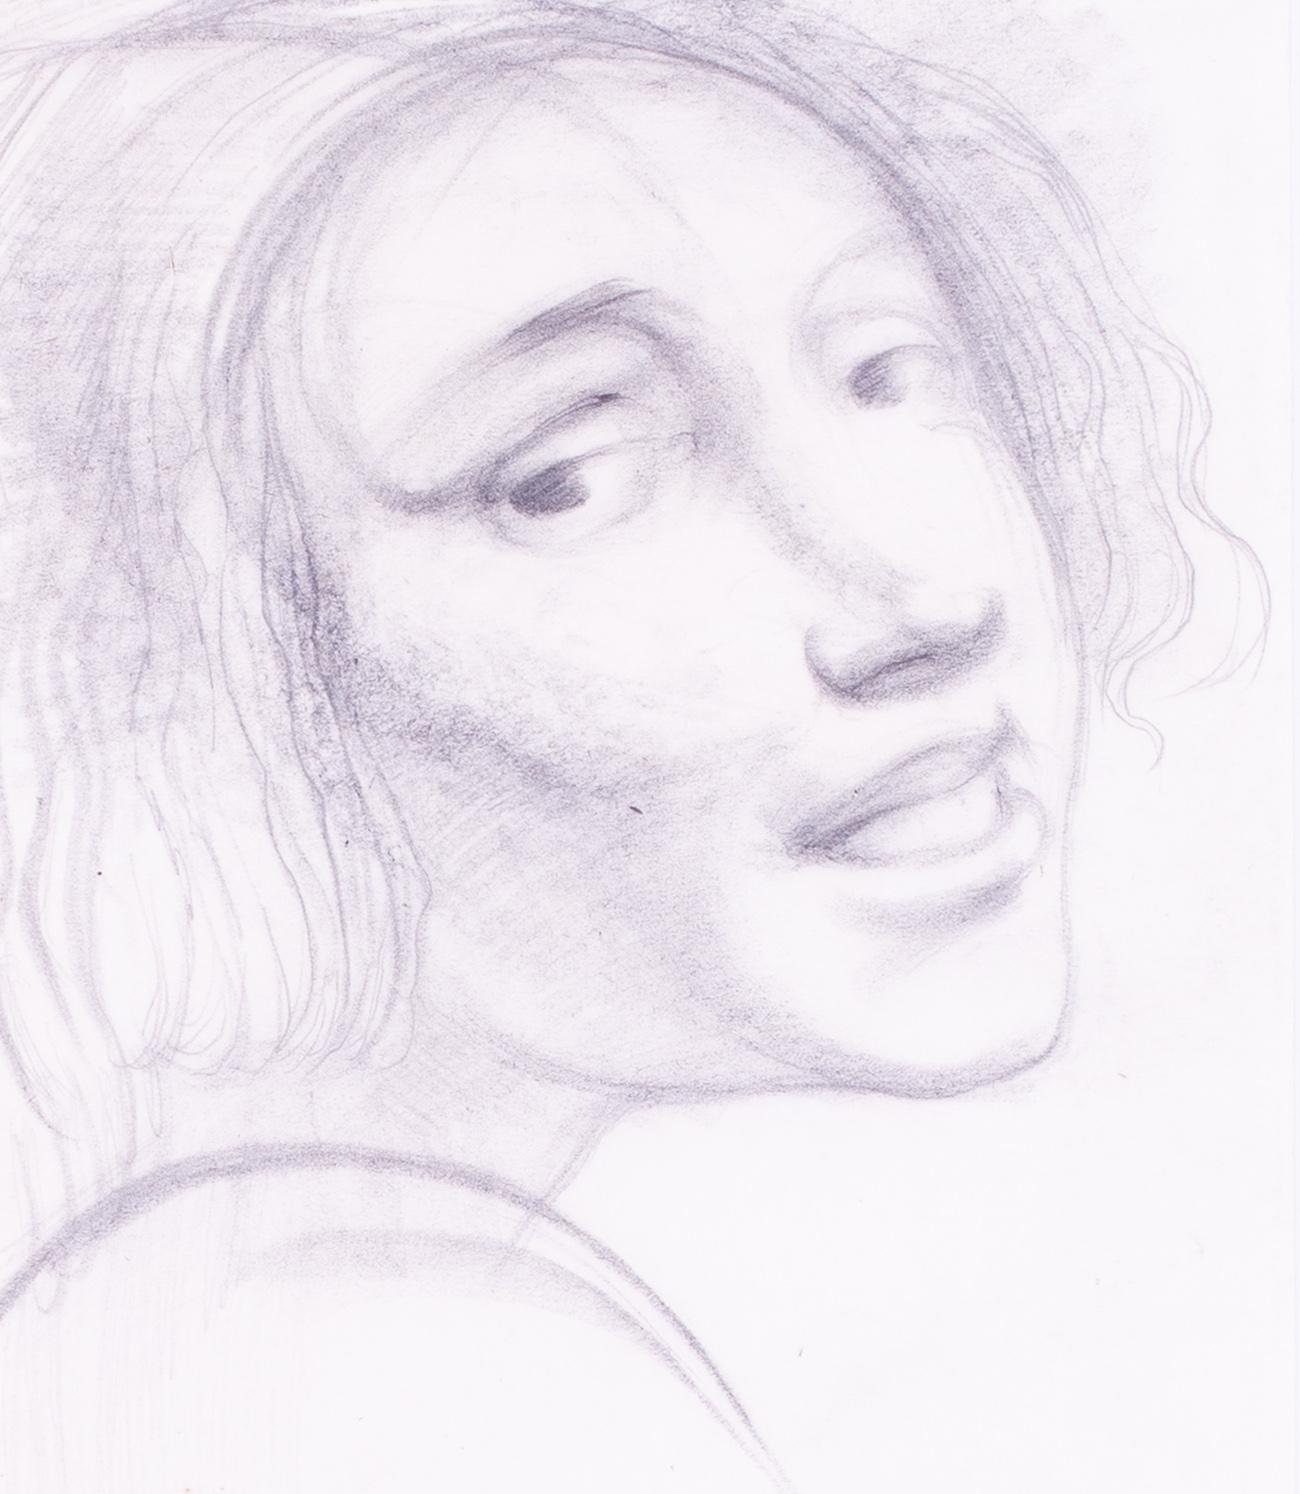 british girl drawn on face